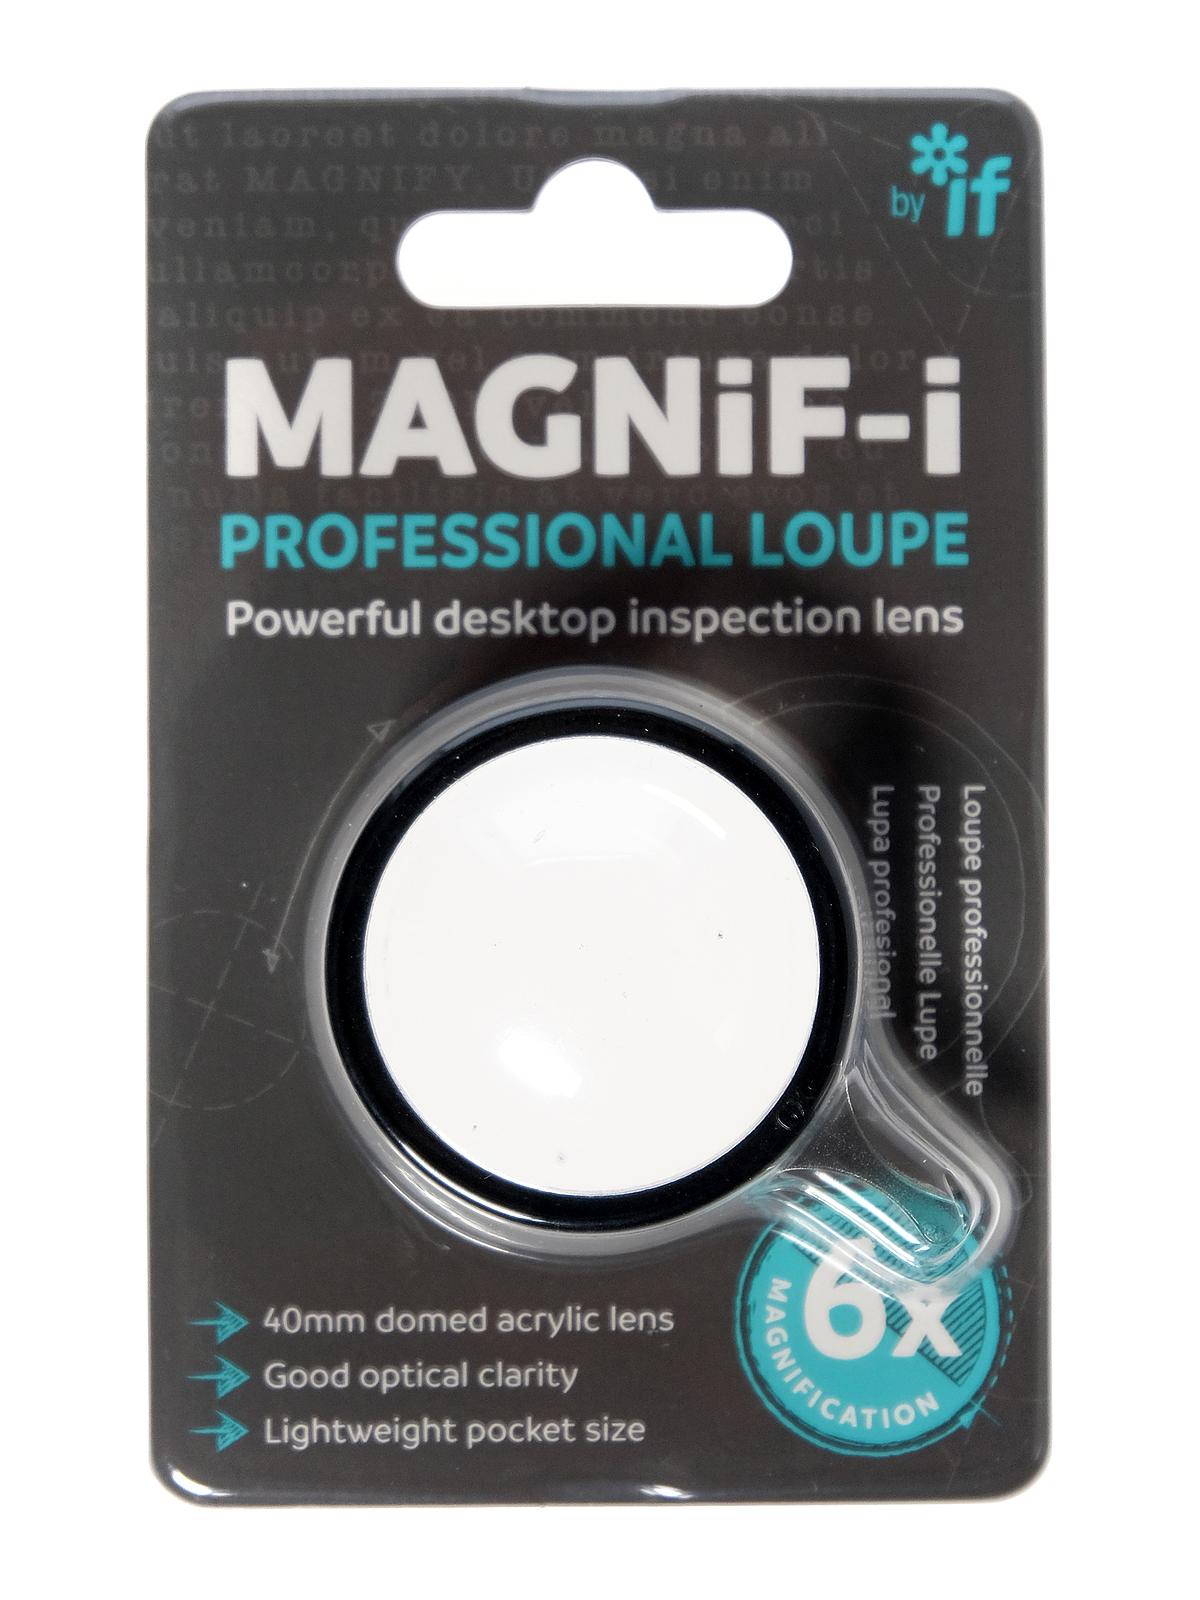 Magnif-I Optical Range Professional Loupe